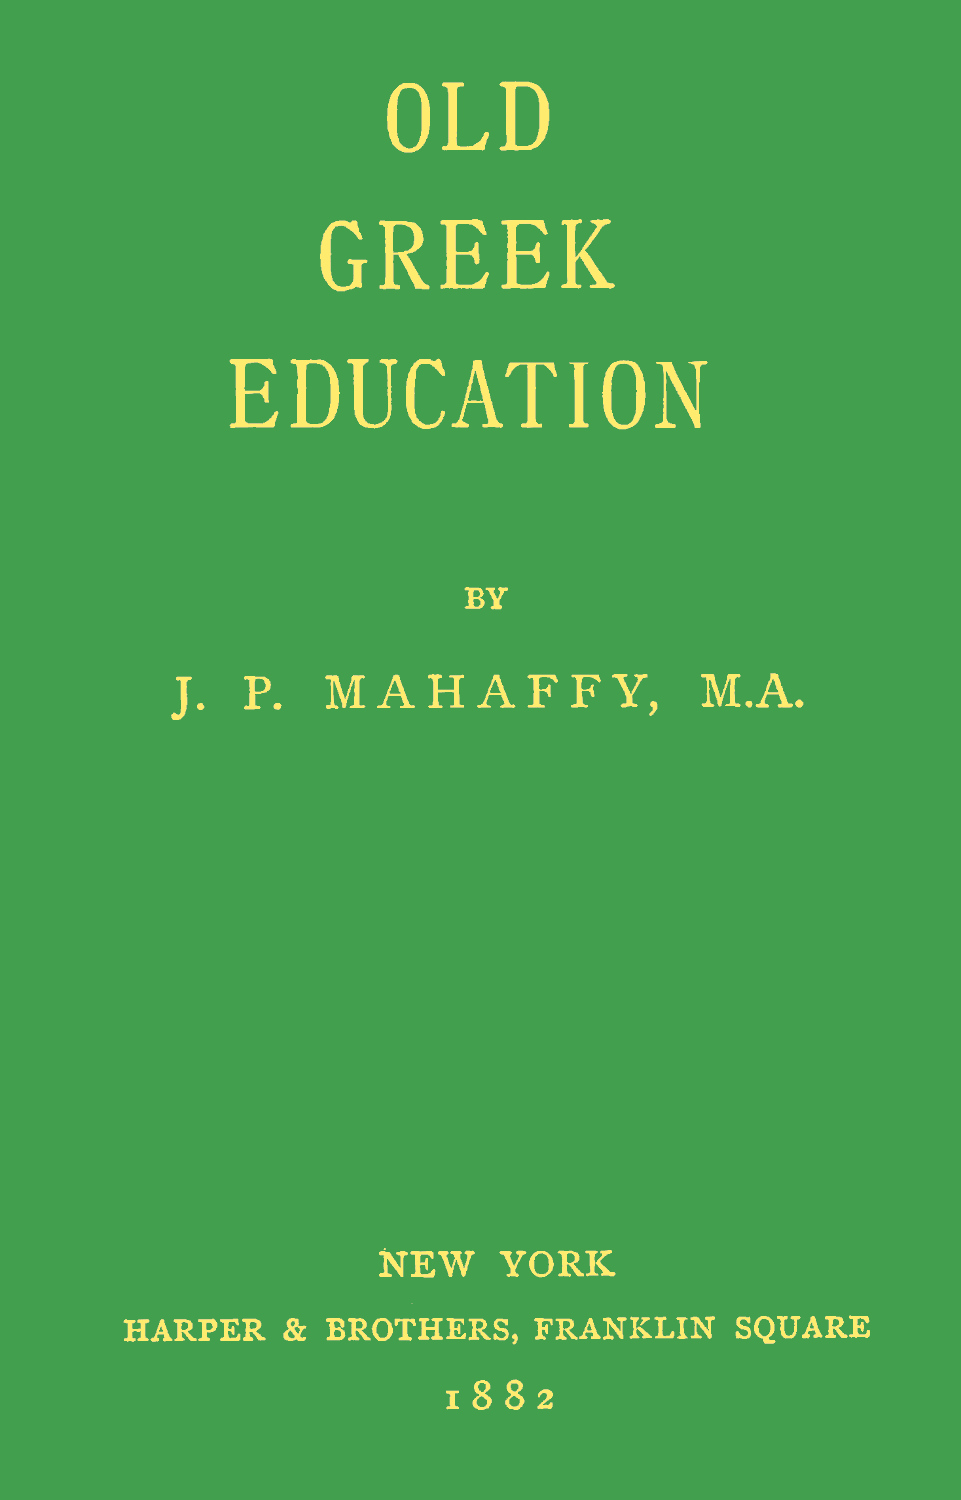 Old Greek Education, by J. P. Mahaffy, M.A.